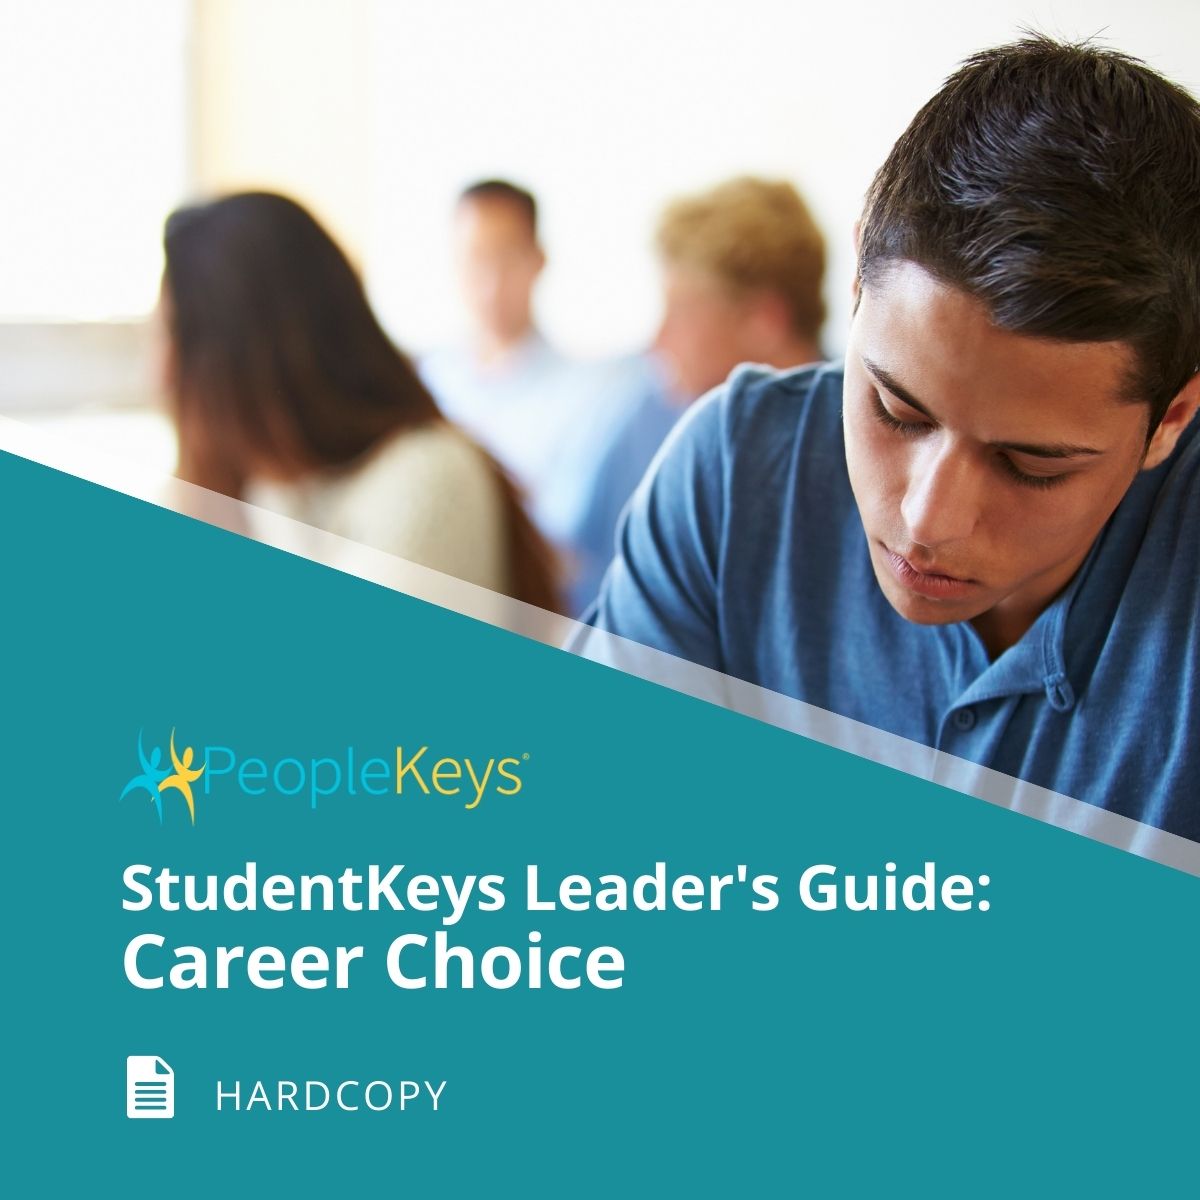 StudentKeys Leader’s Guide: Career Choice (Hardcopy)